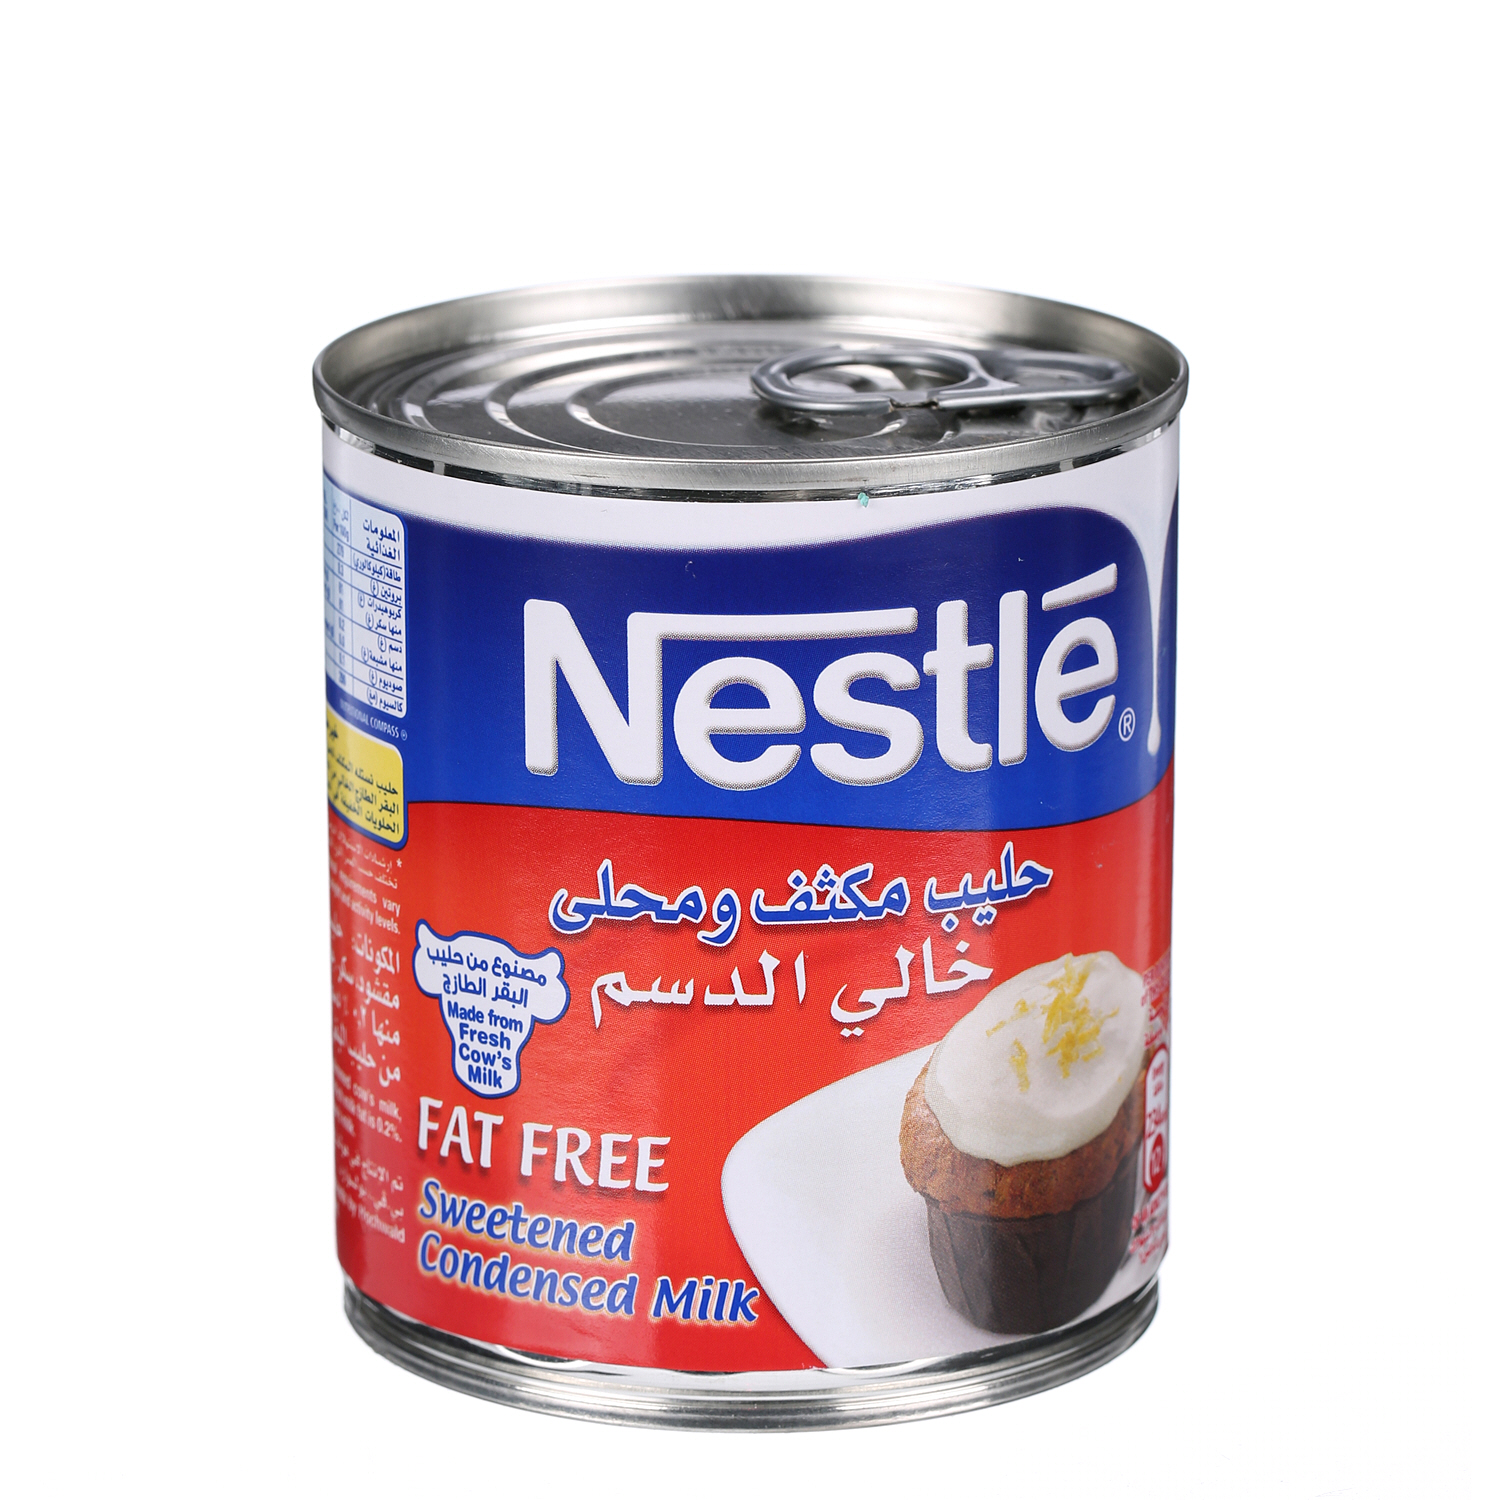 Nestlé Sweetened Condensed Milk Fat Free 405gm